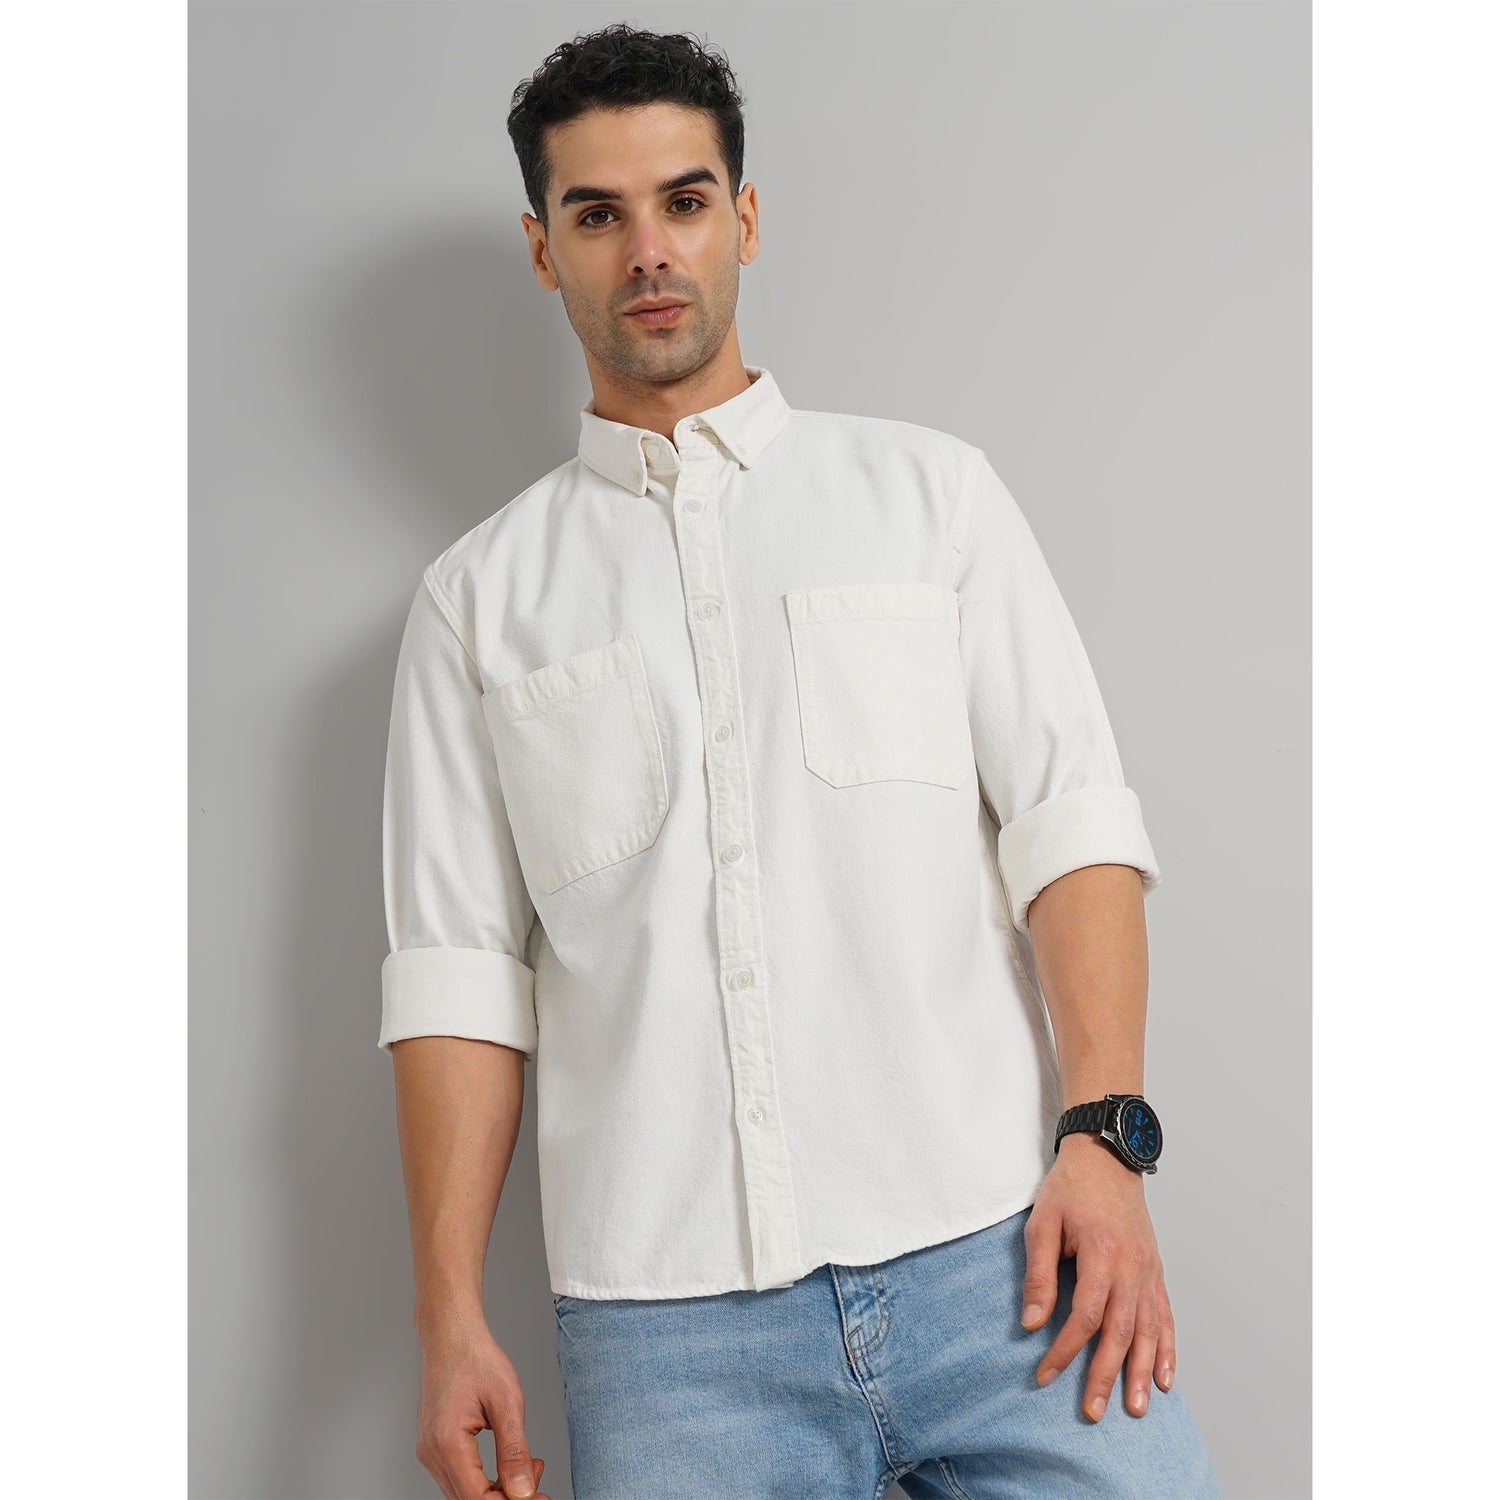 Men's White Solid Slim Fit Cotton Denim Casual Shirt (GAINDIE)